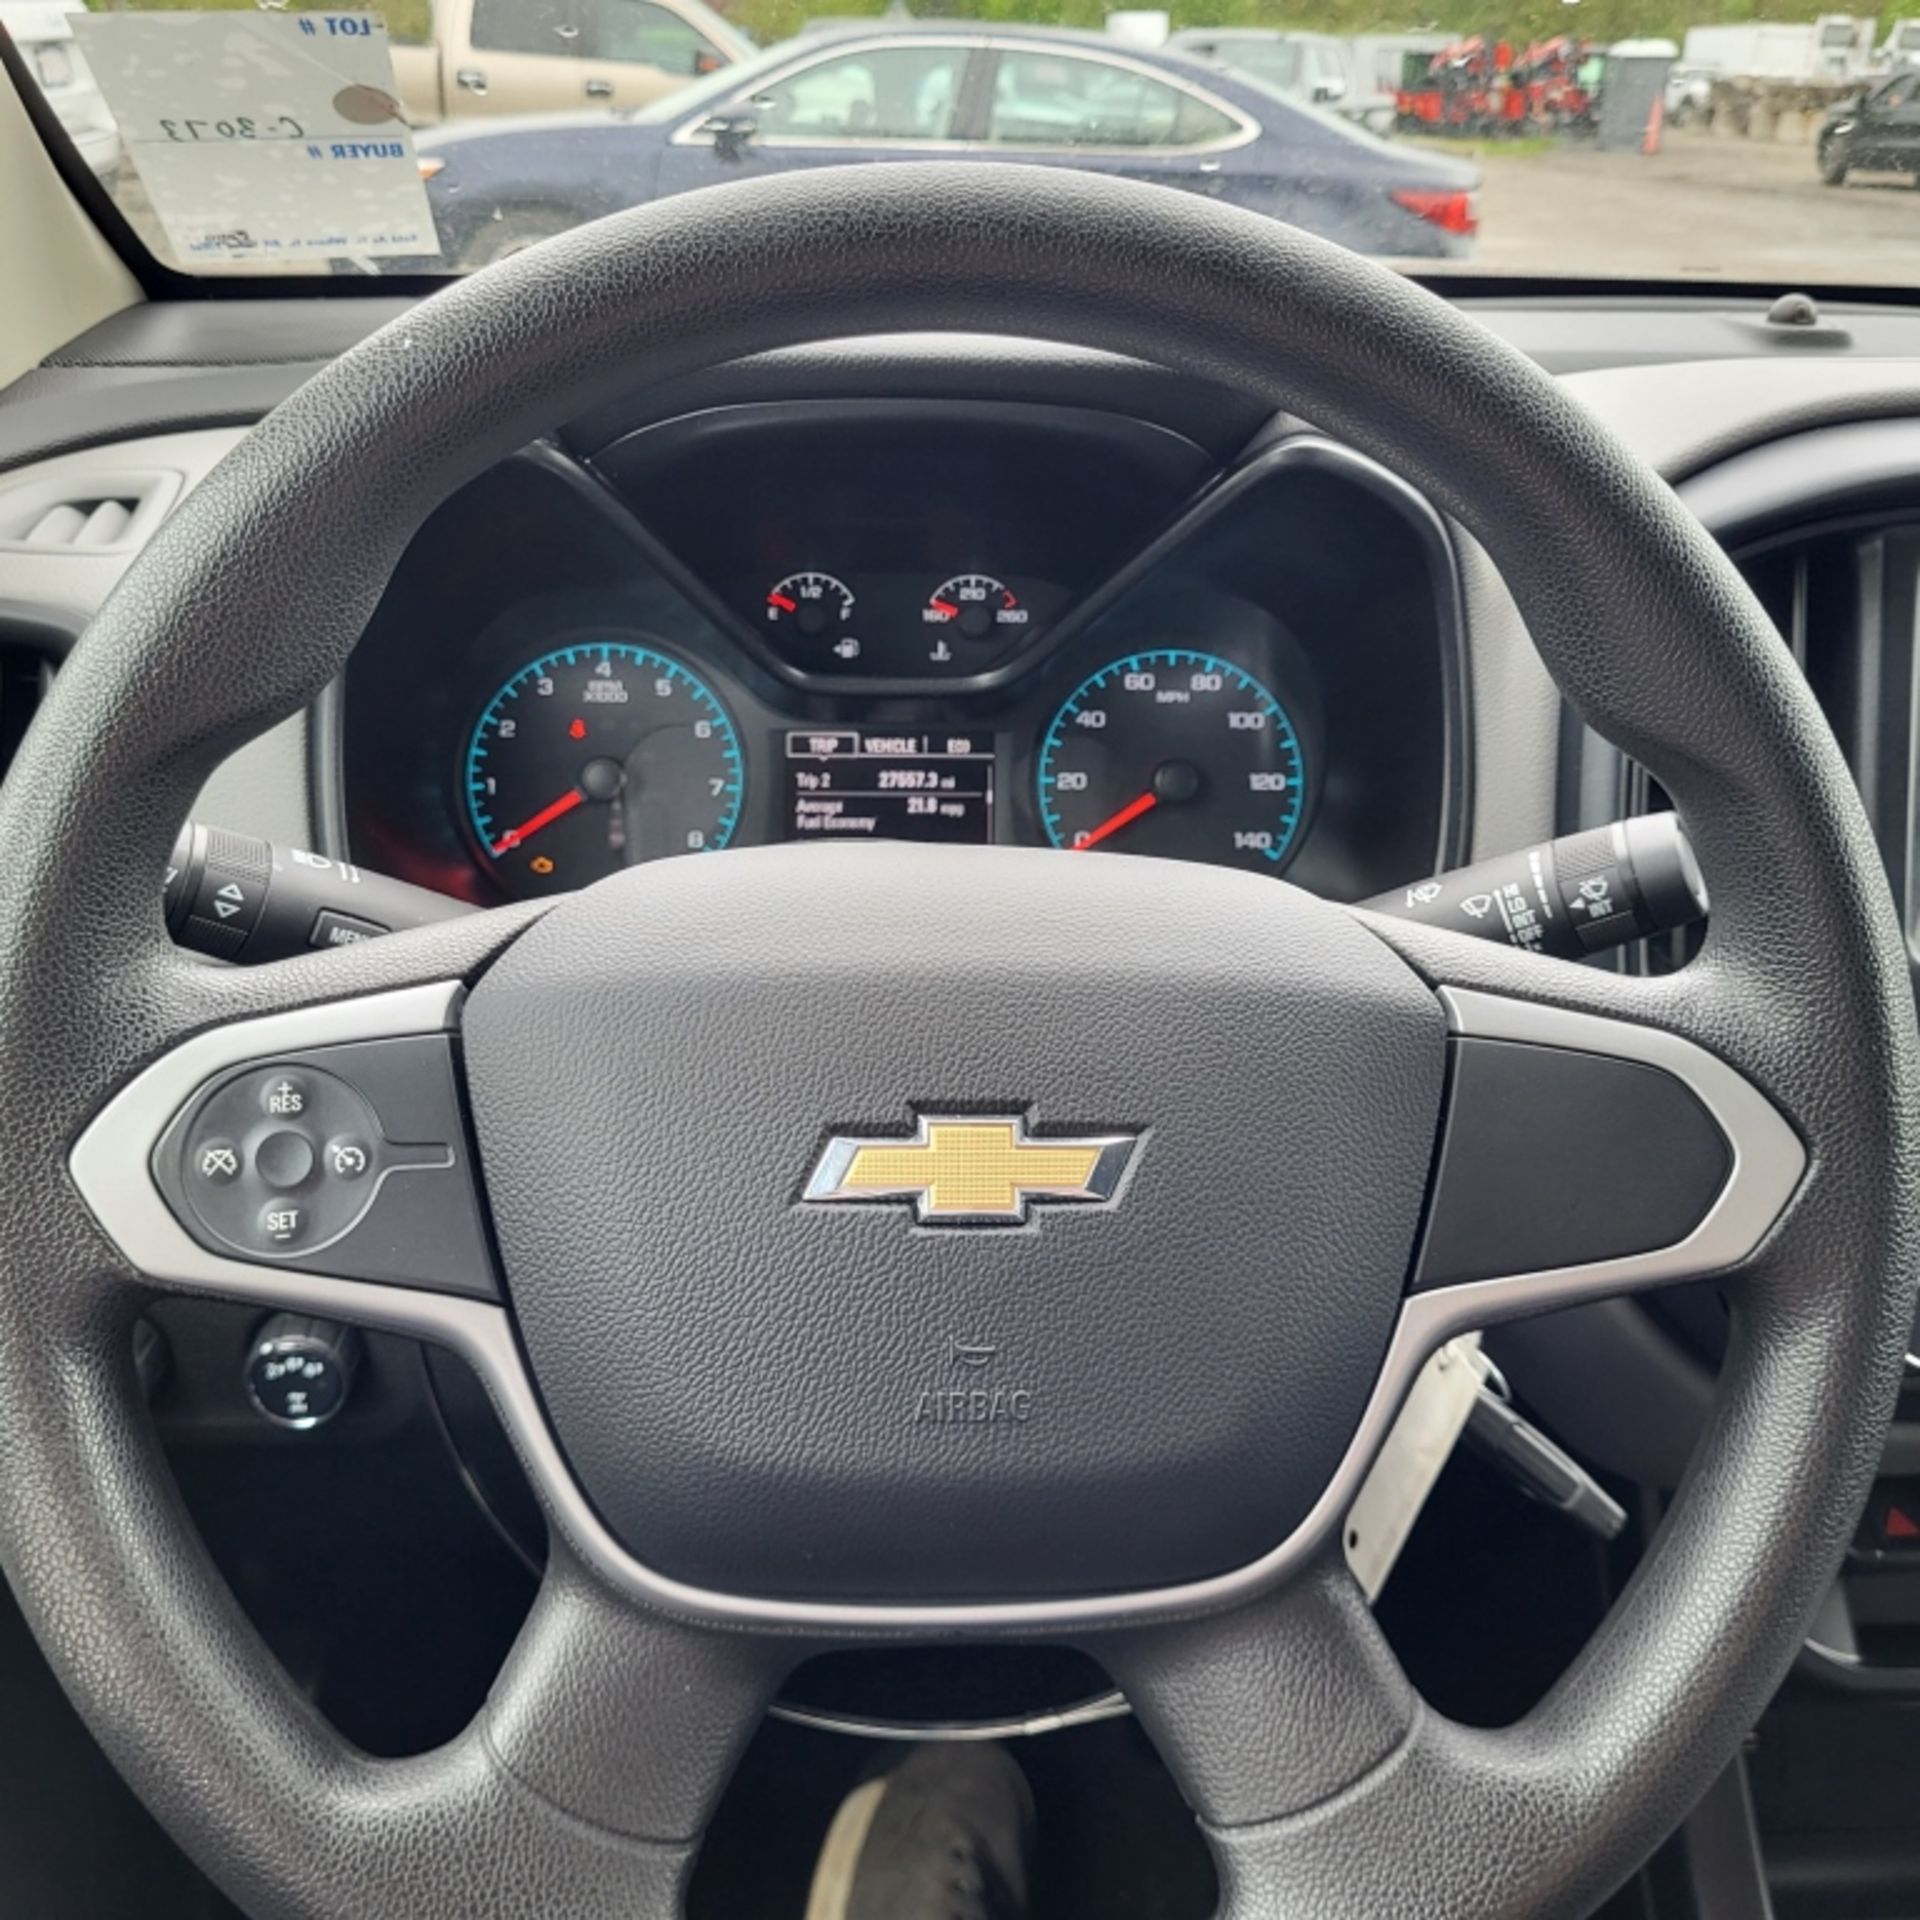 2018 Chevy Colorado Pickup - Image 20 of 22